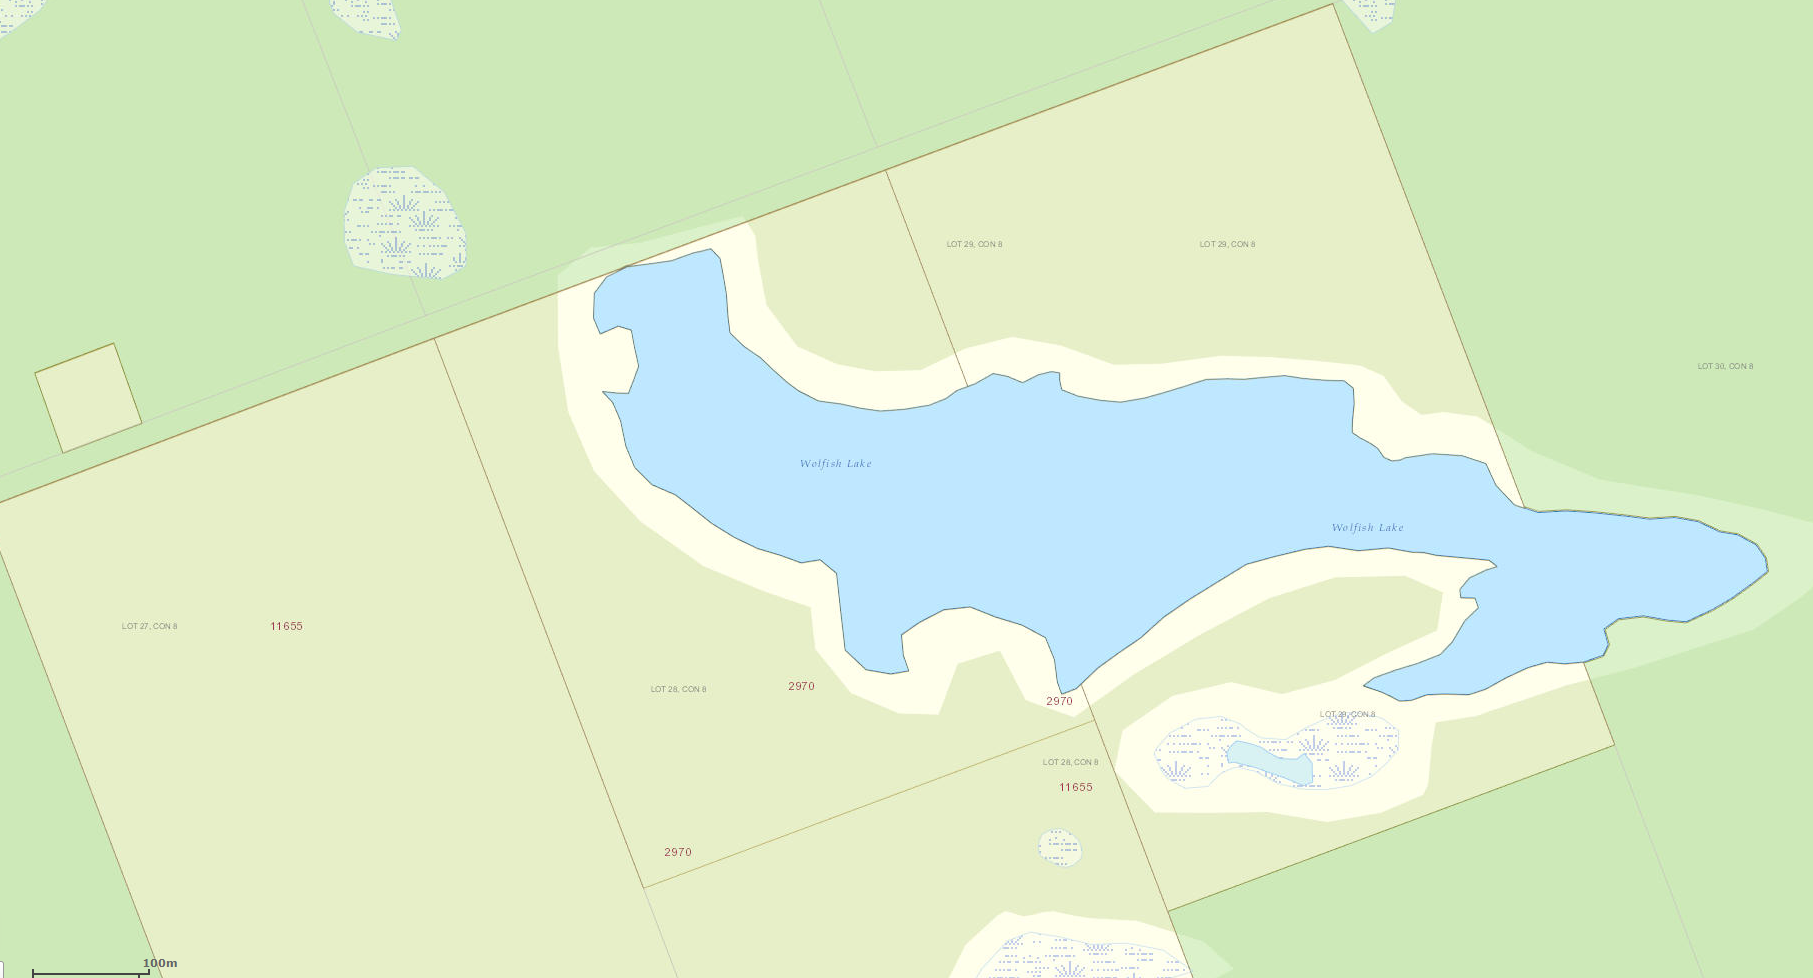 Wolfish Lake Cadastral Map - Wolfish Lake - Muskoka